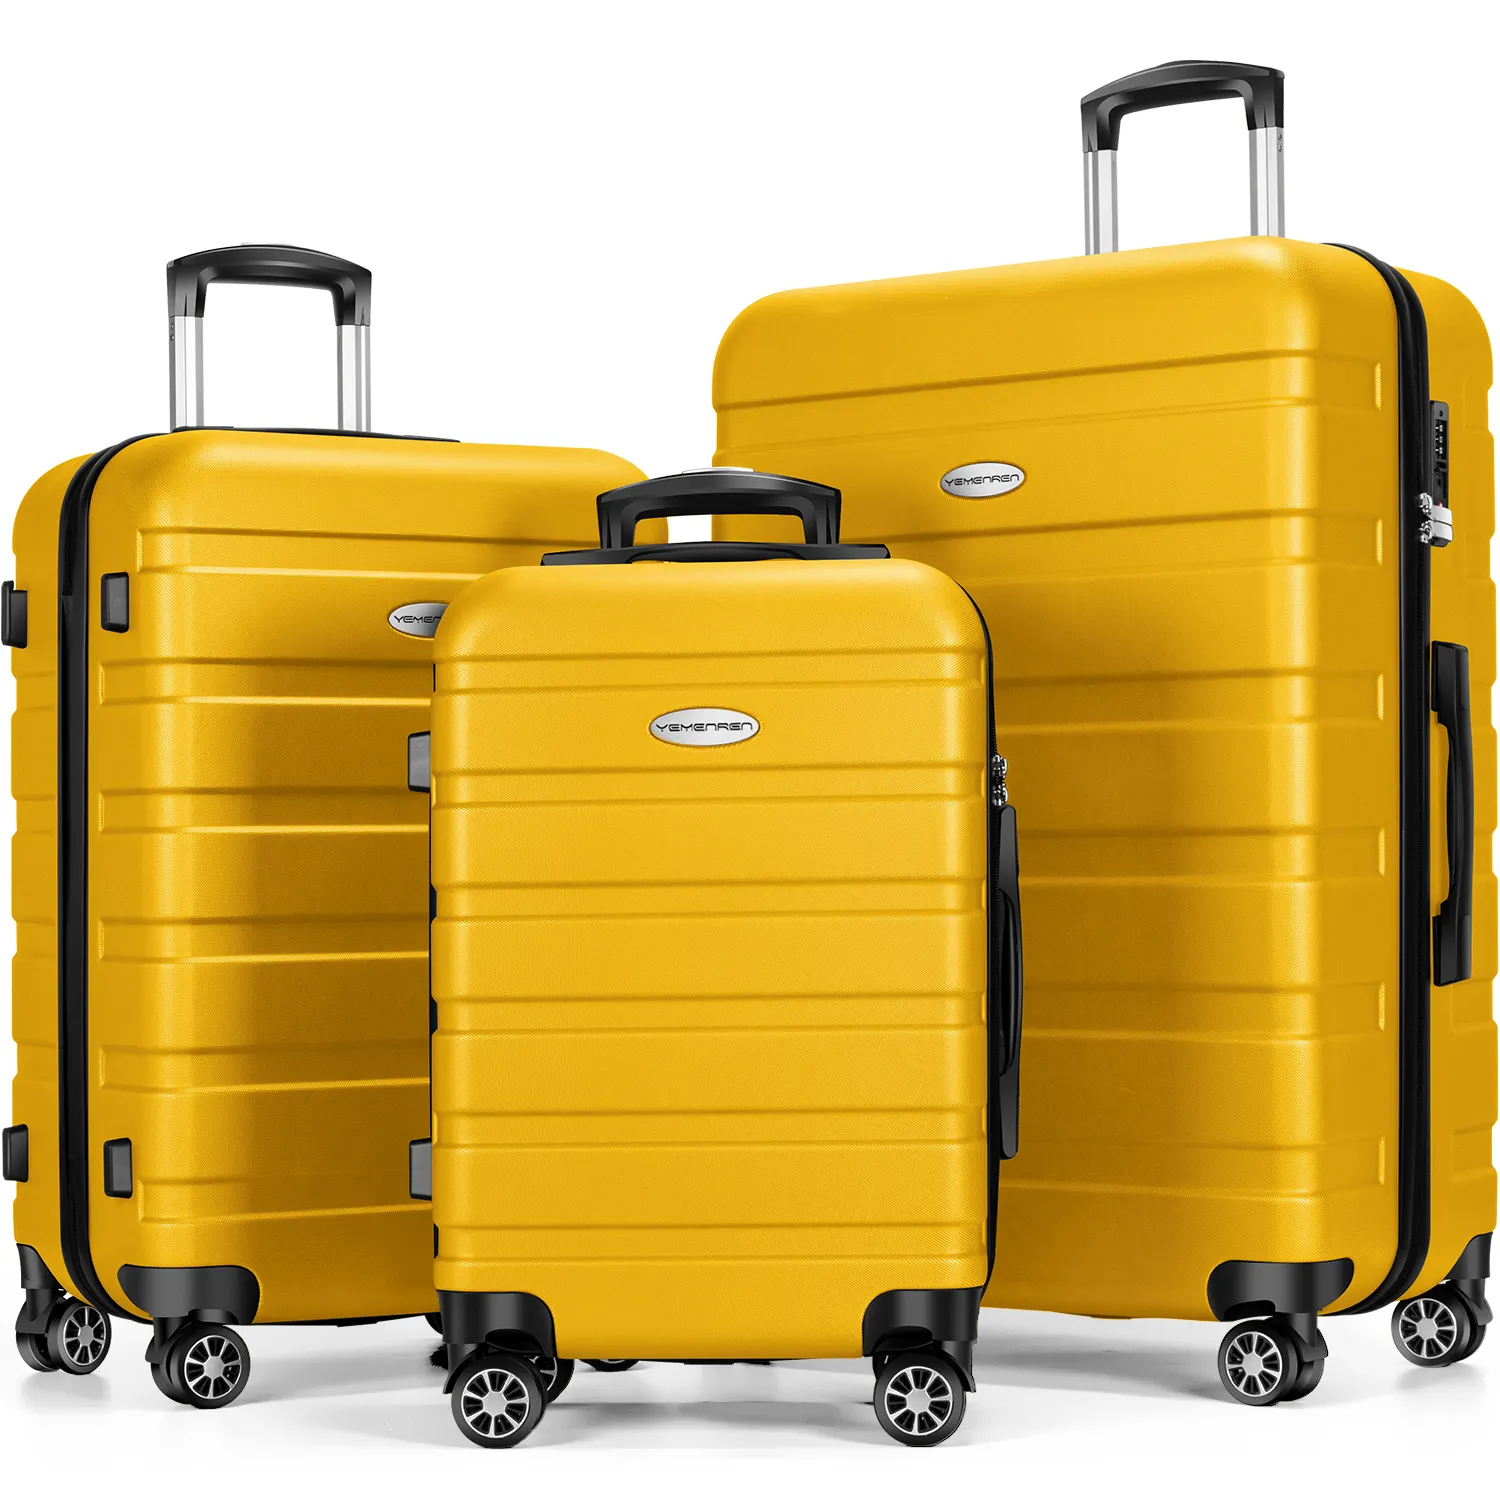 ABS suitcases set 3 pcs trolley luggage travel bags hot sale suitcase luggage 28 inch TSA lock suitcase luggage men women